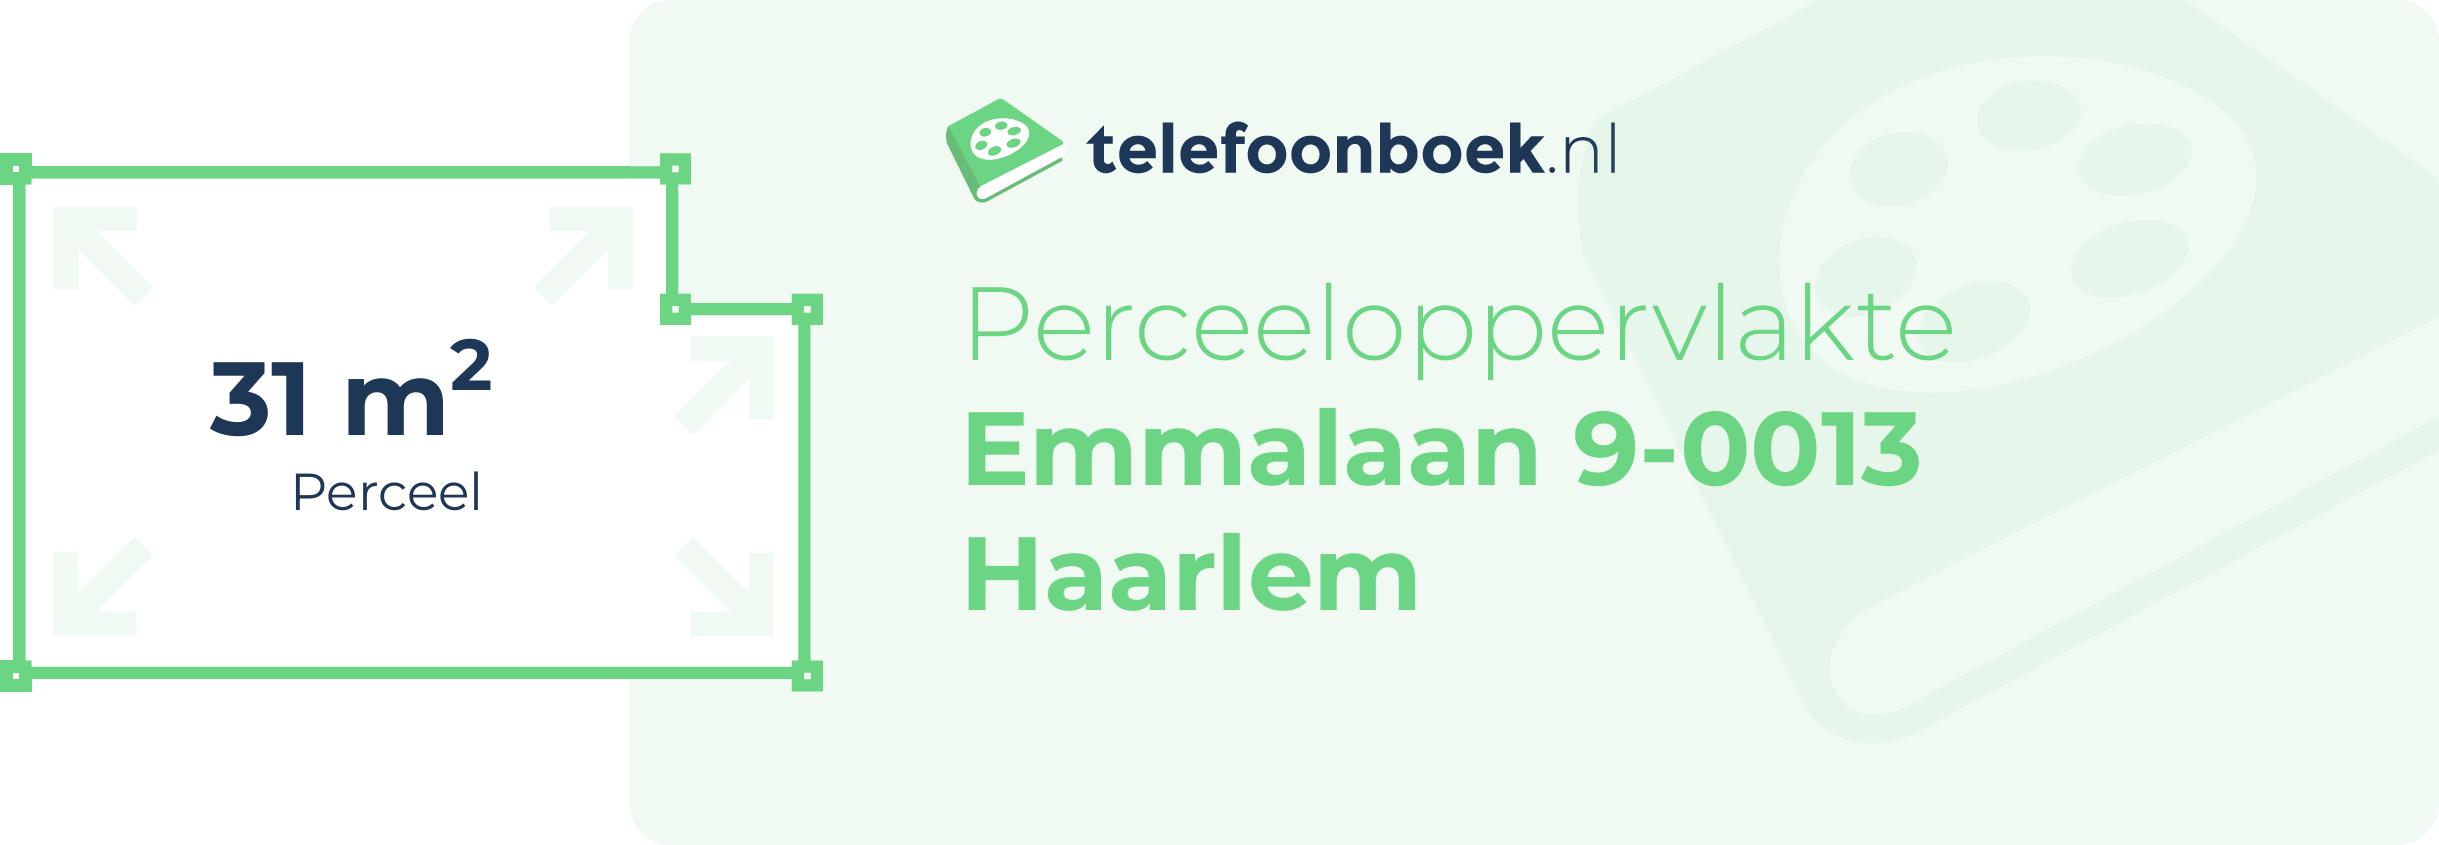 Perceeloppervlakte Emmalaan 9-0013 Haarlem